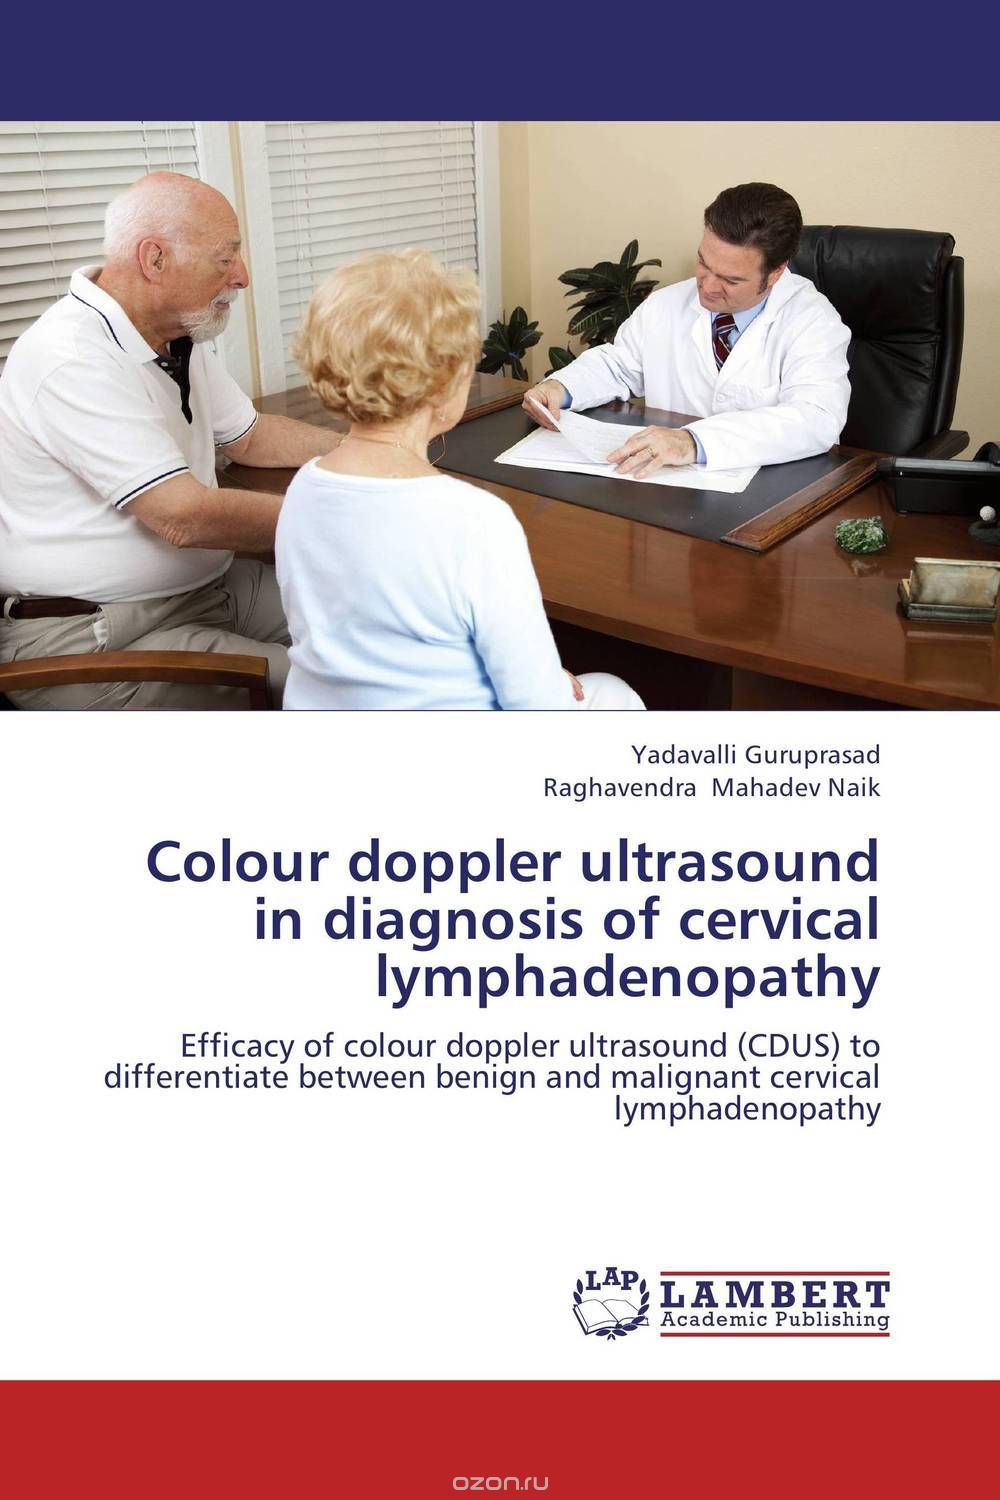 Скачать книгу "Colour doppler ultrasound in diagnosis of cervical lymphadenopathy"